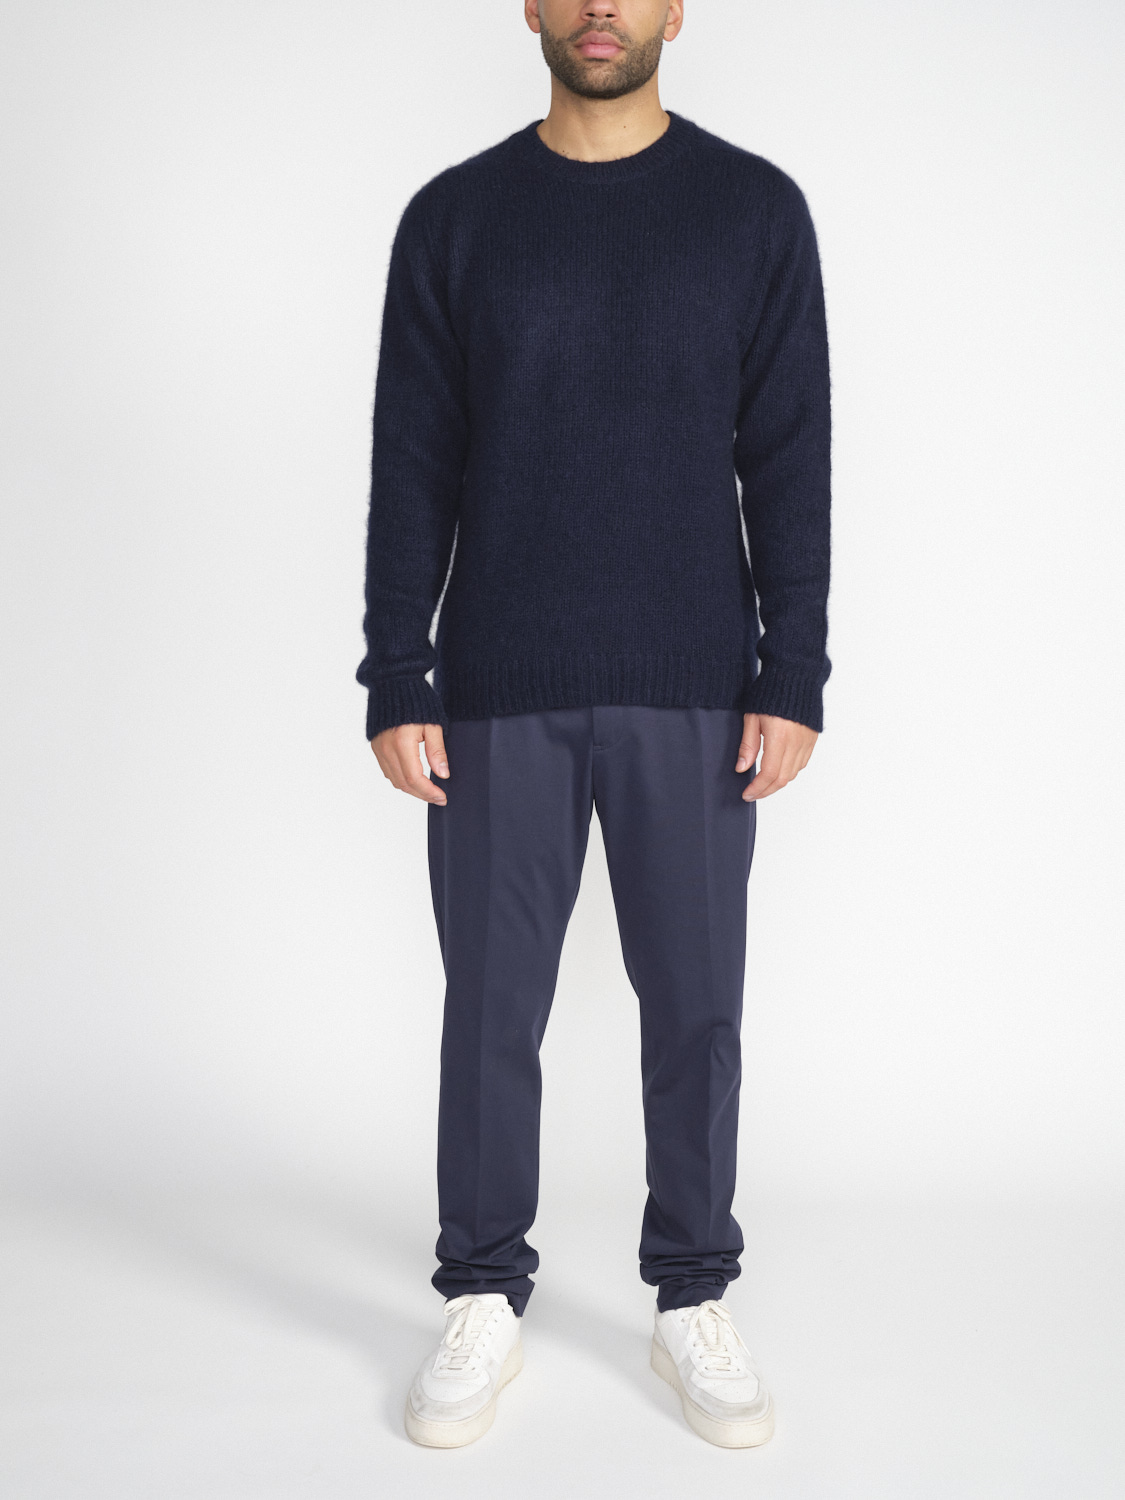 Stephan Boya Boya Leo – Soft cashmere sweater  marine S